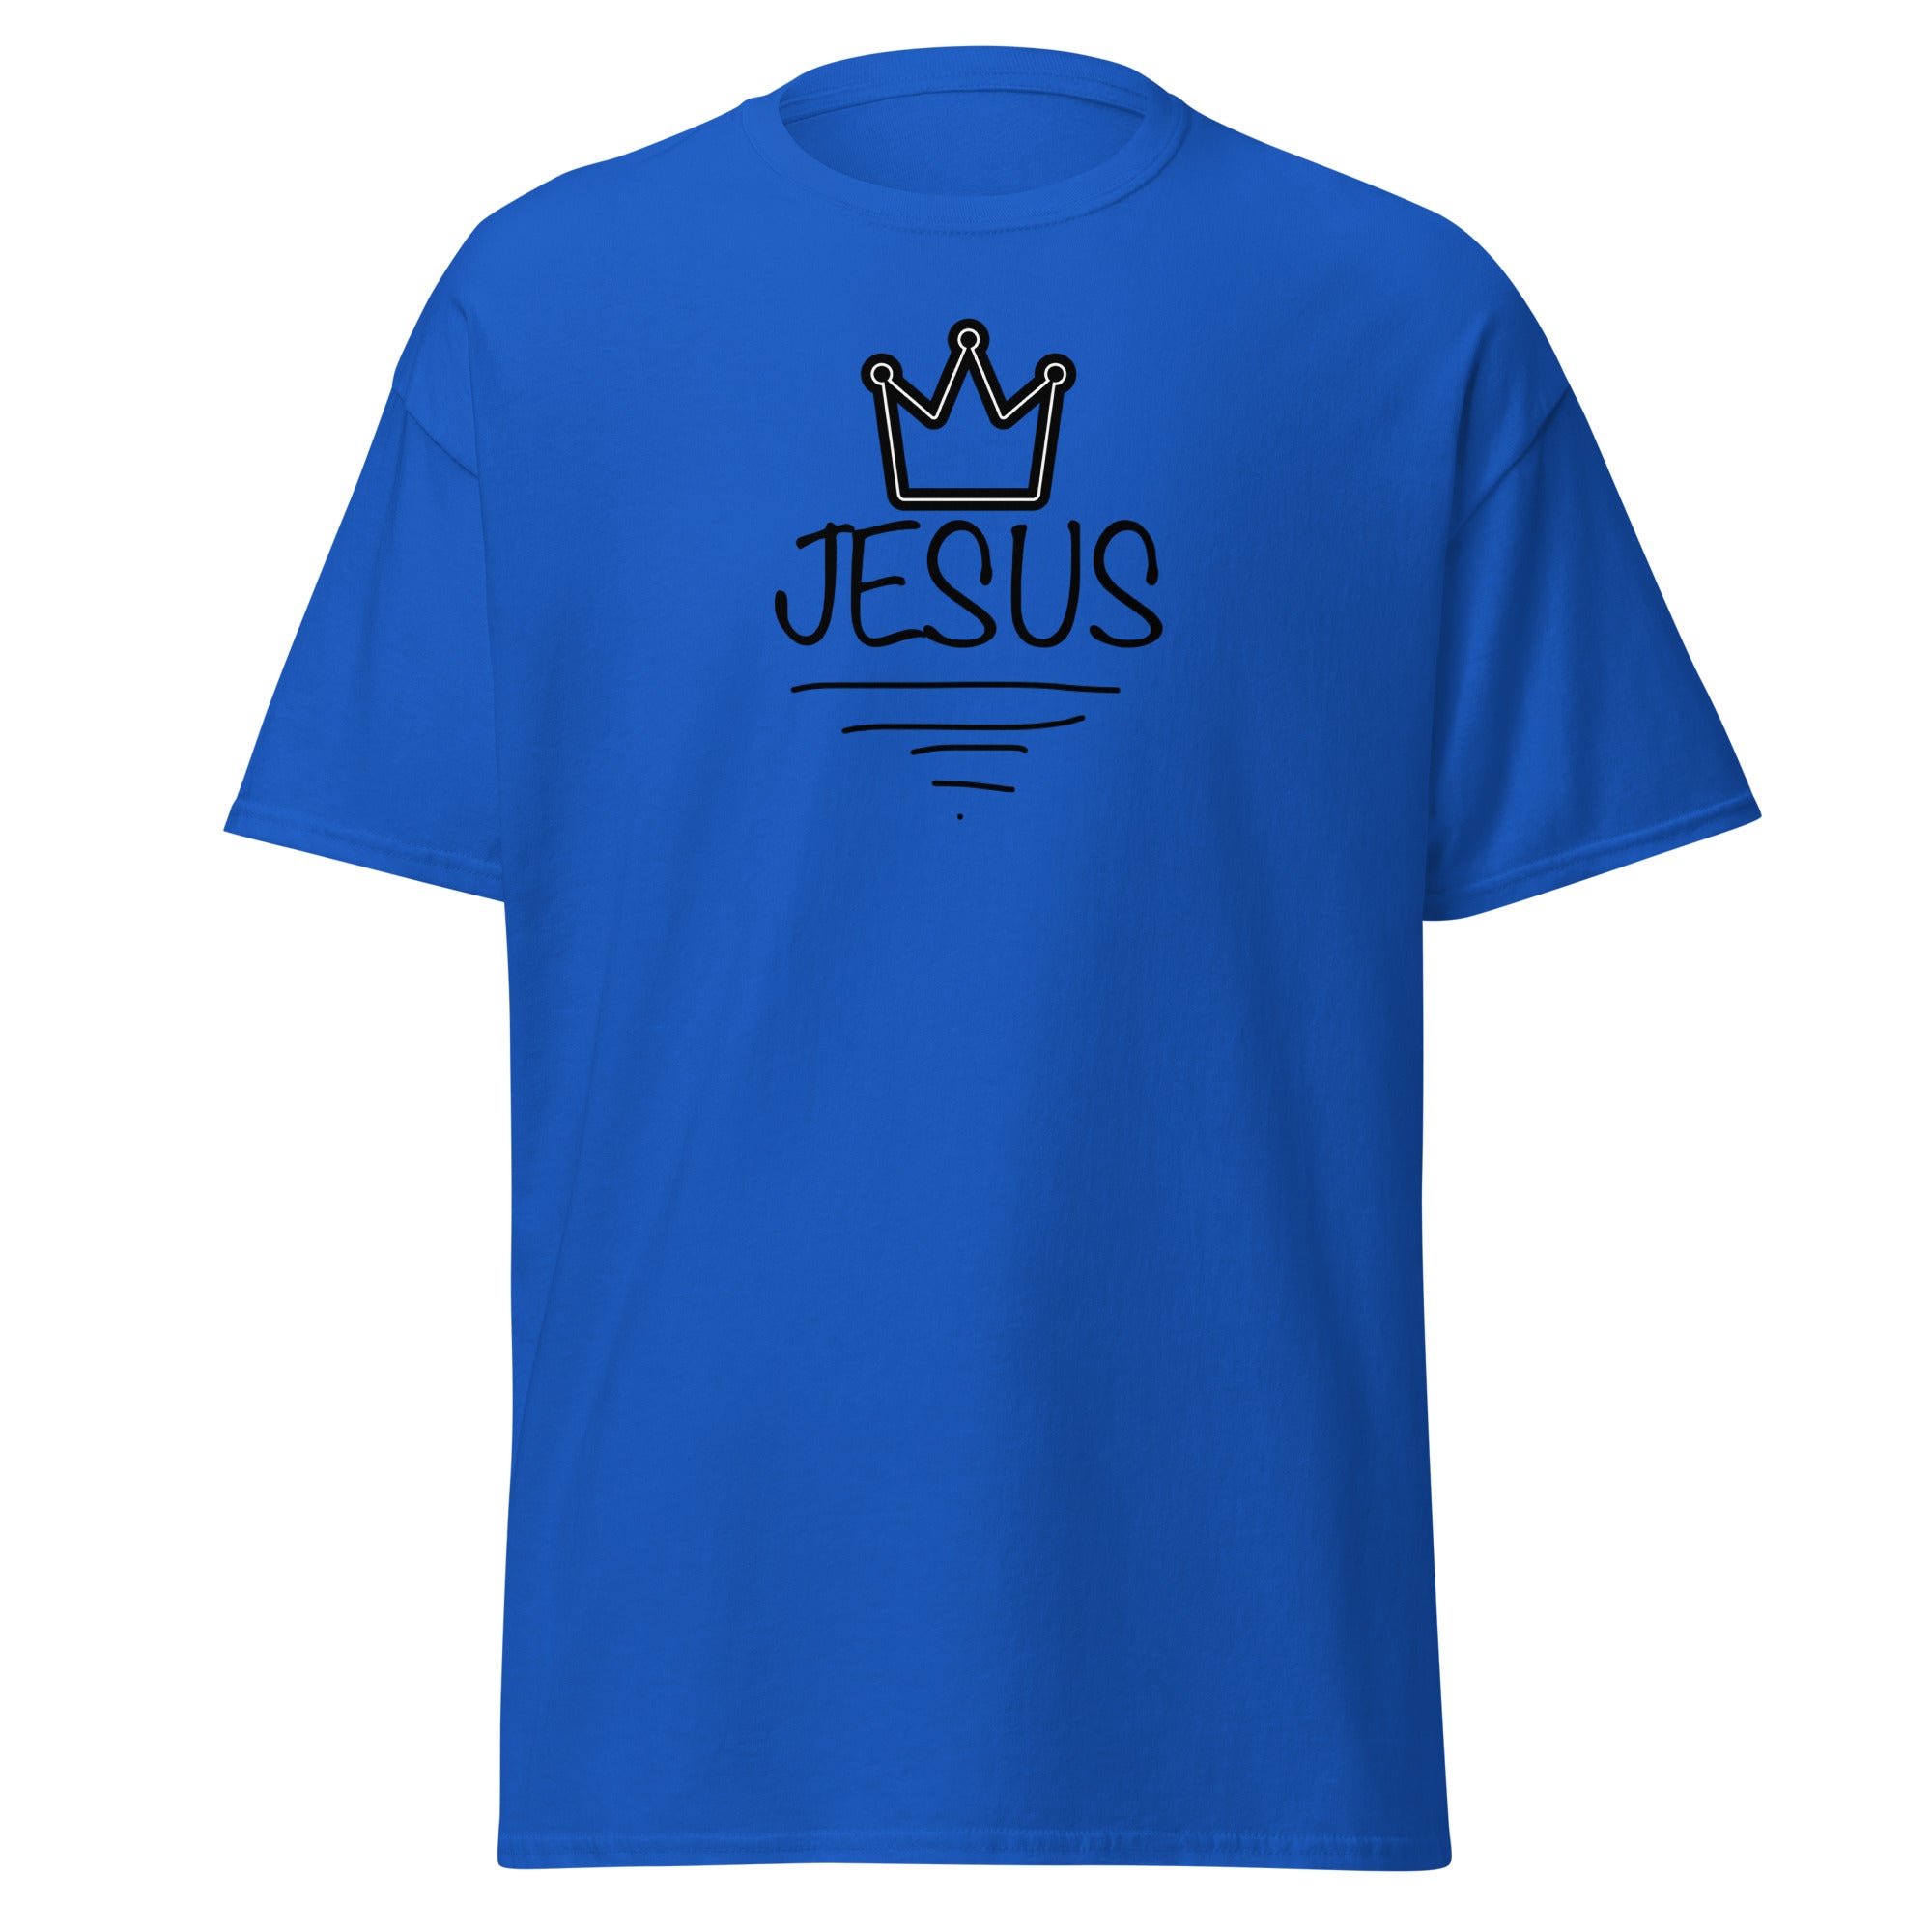 Thriving Faith Men's classic tee (Jesus)